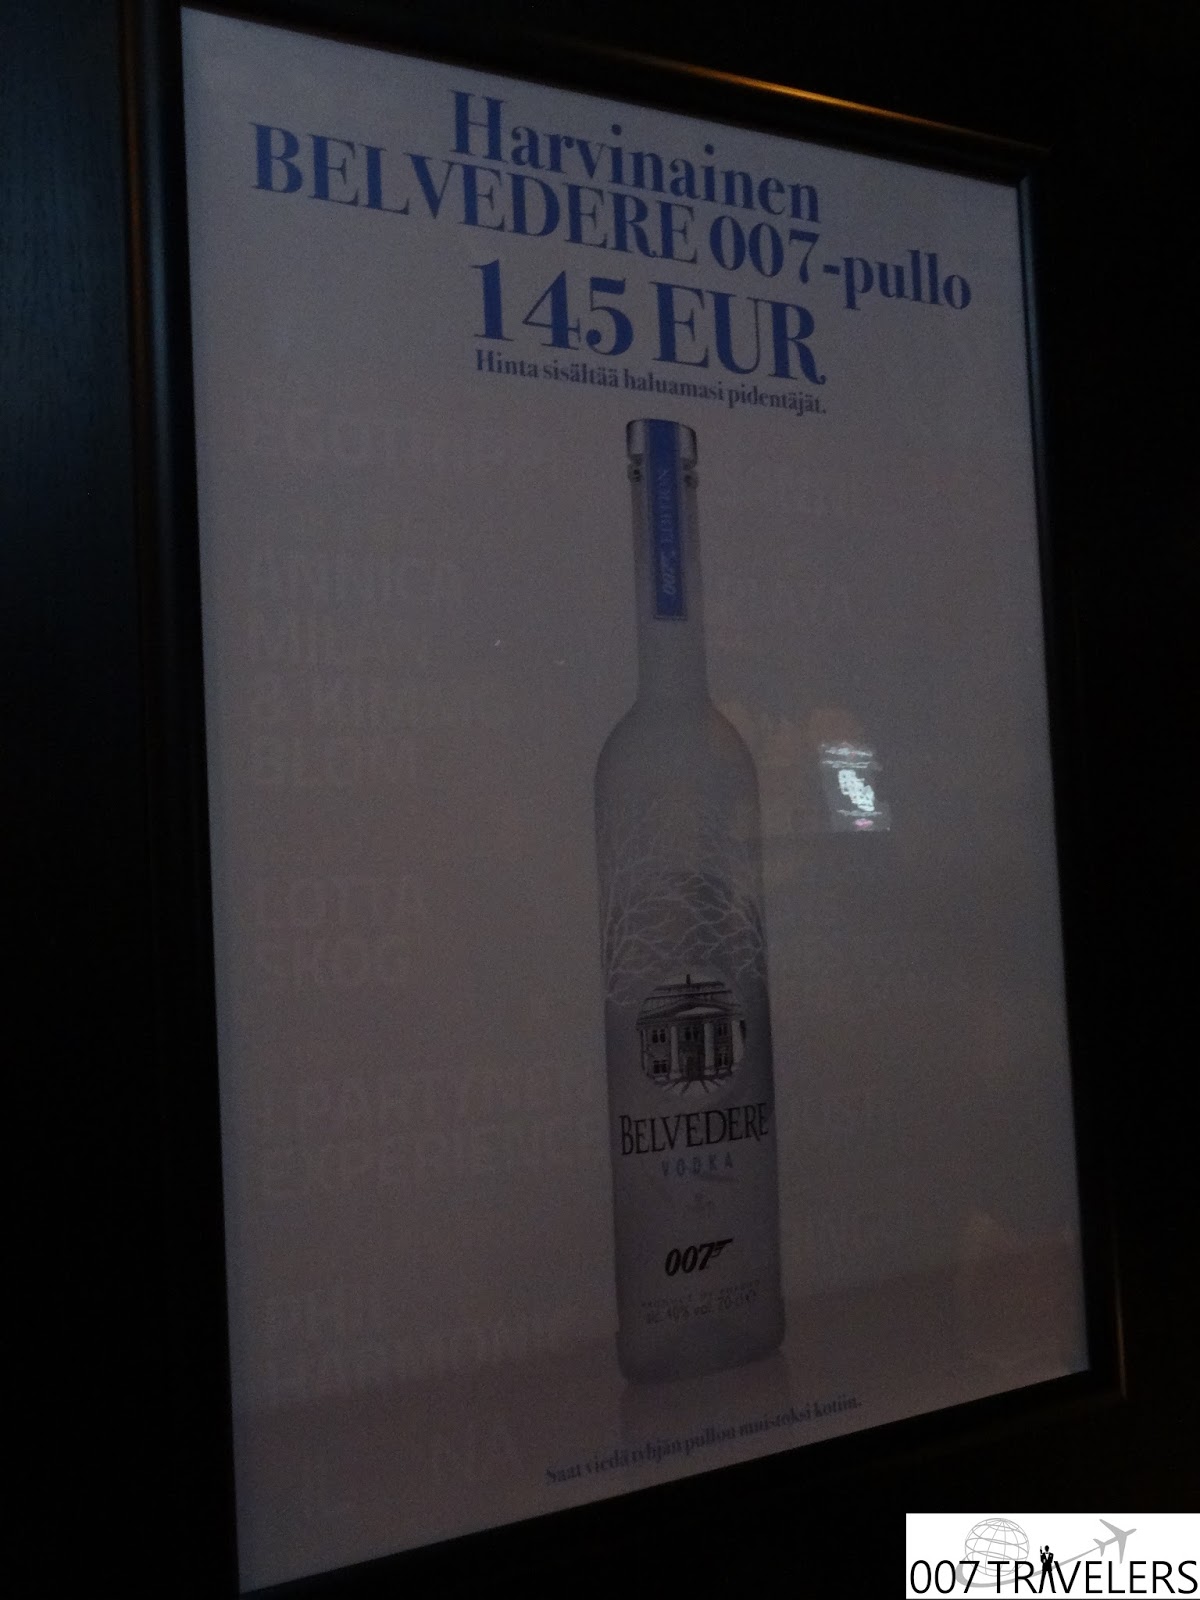 007 TRAVELERS: 007 Drink: Belvedere 007 - martini